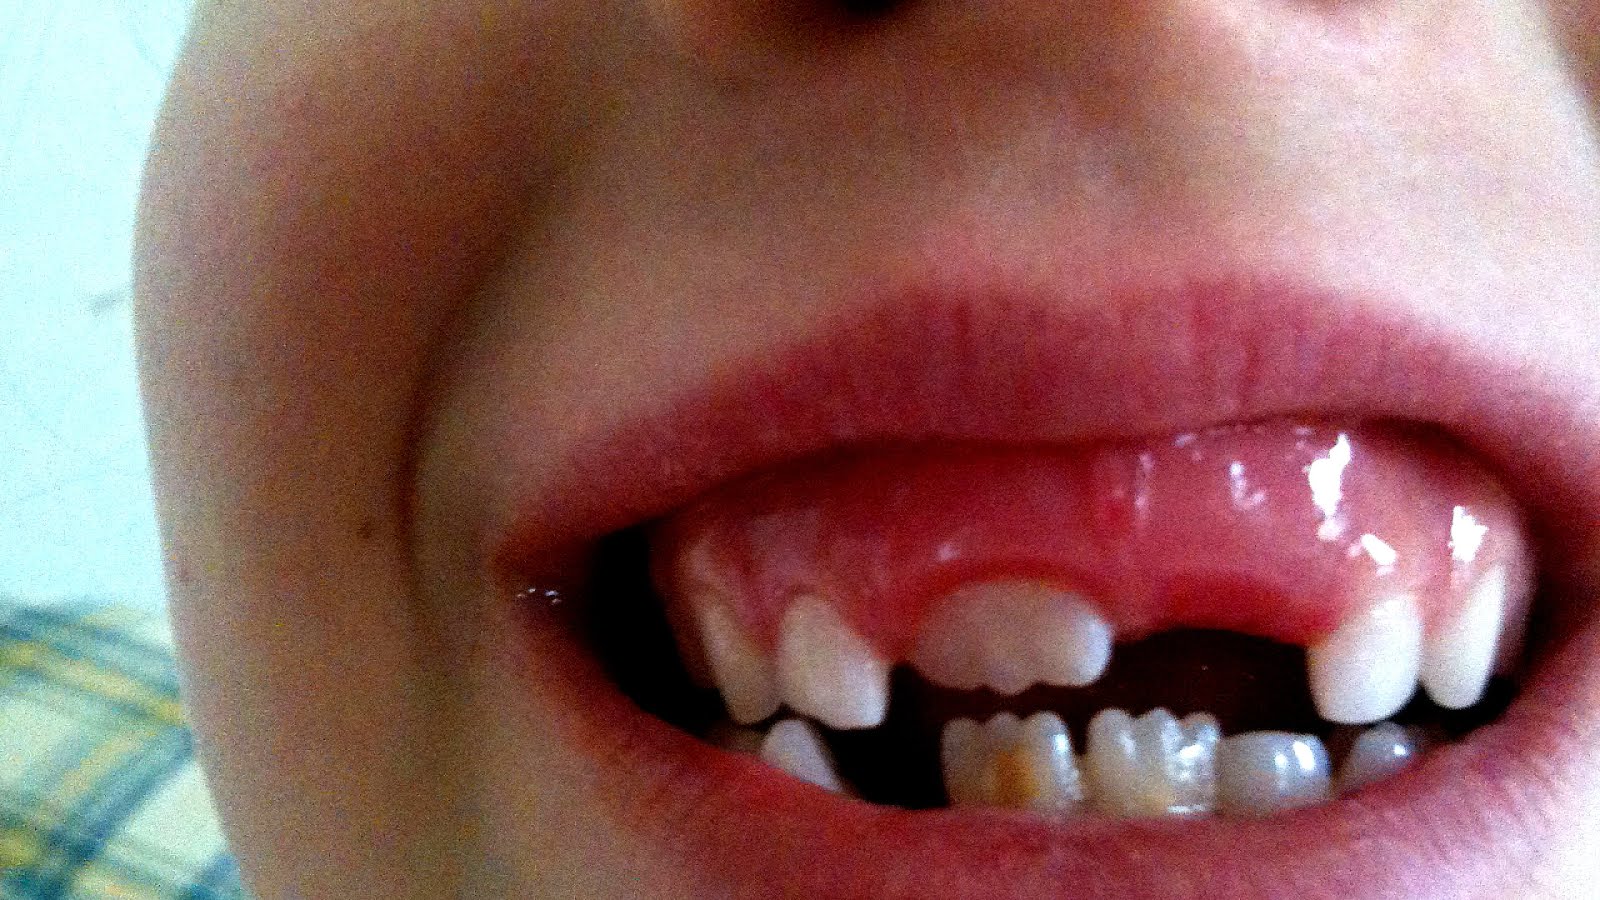 white spots on yellow teeth